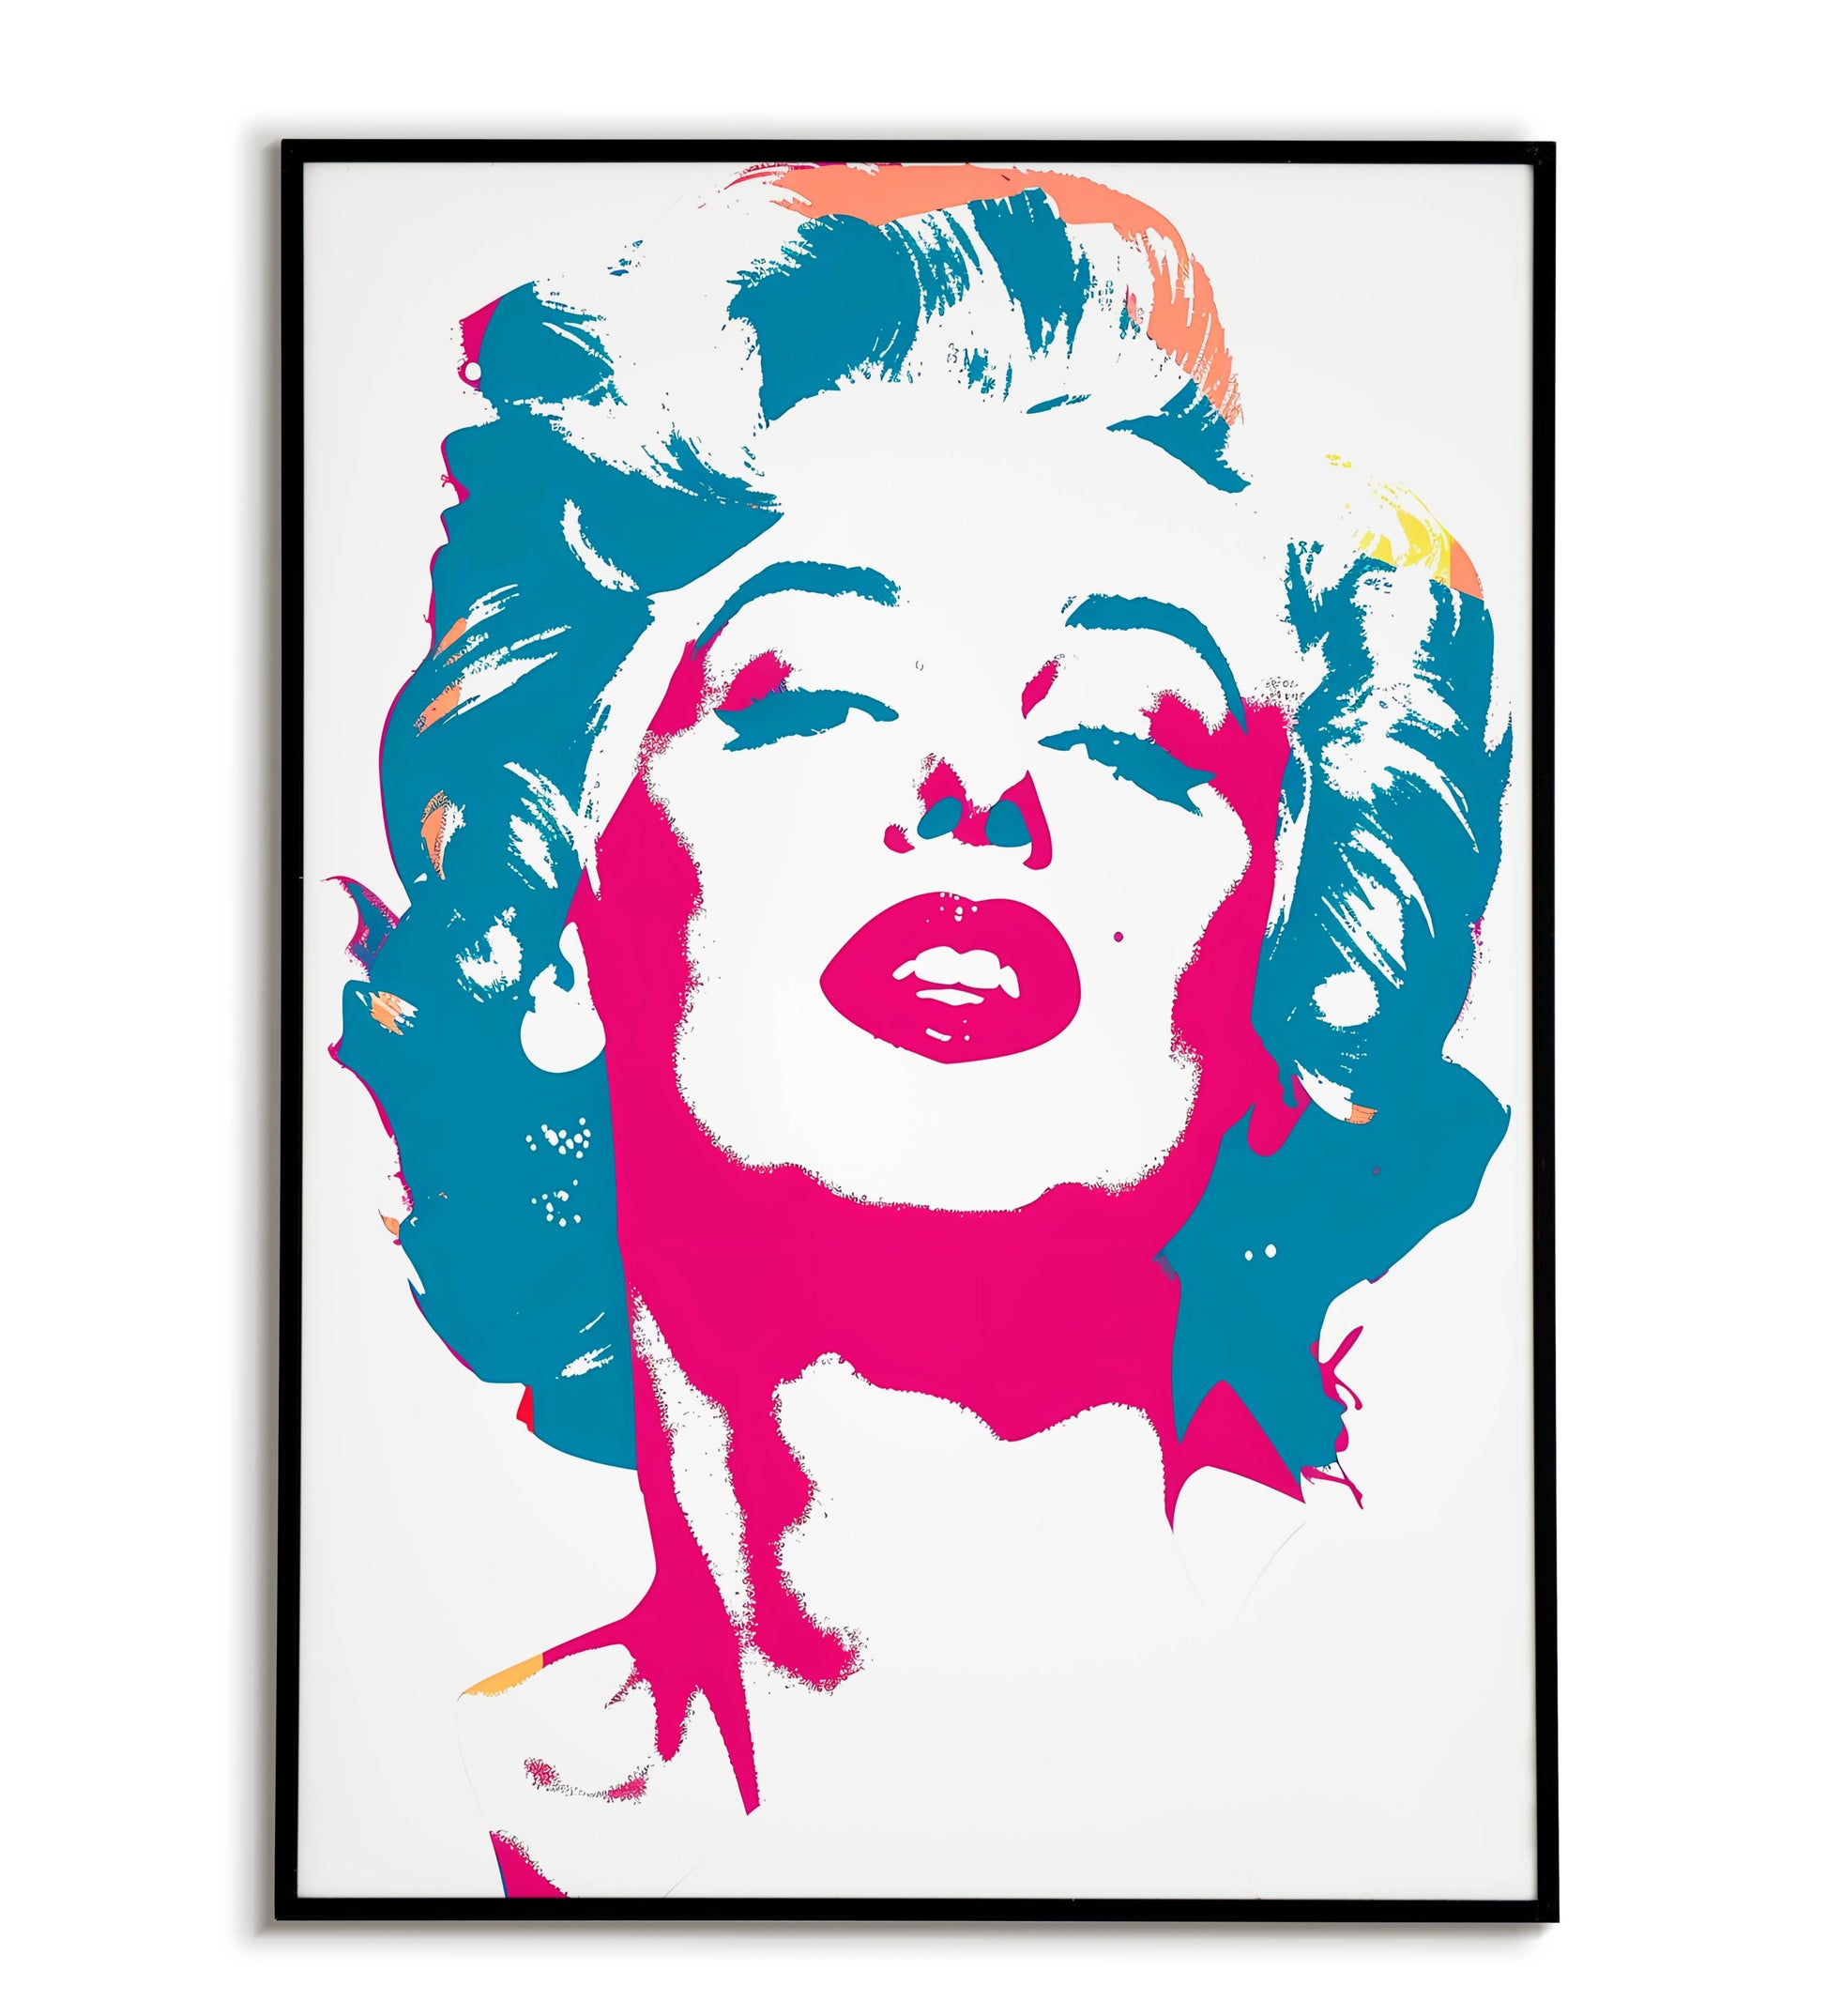 Marilyn Monroe" abstract portrait